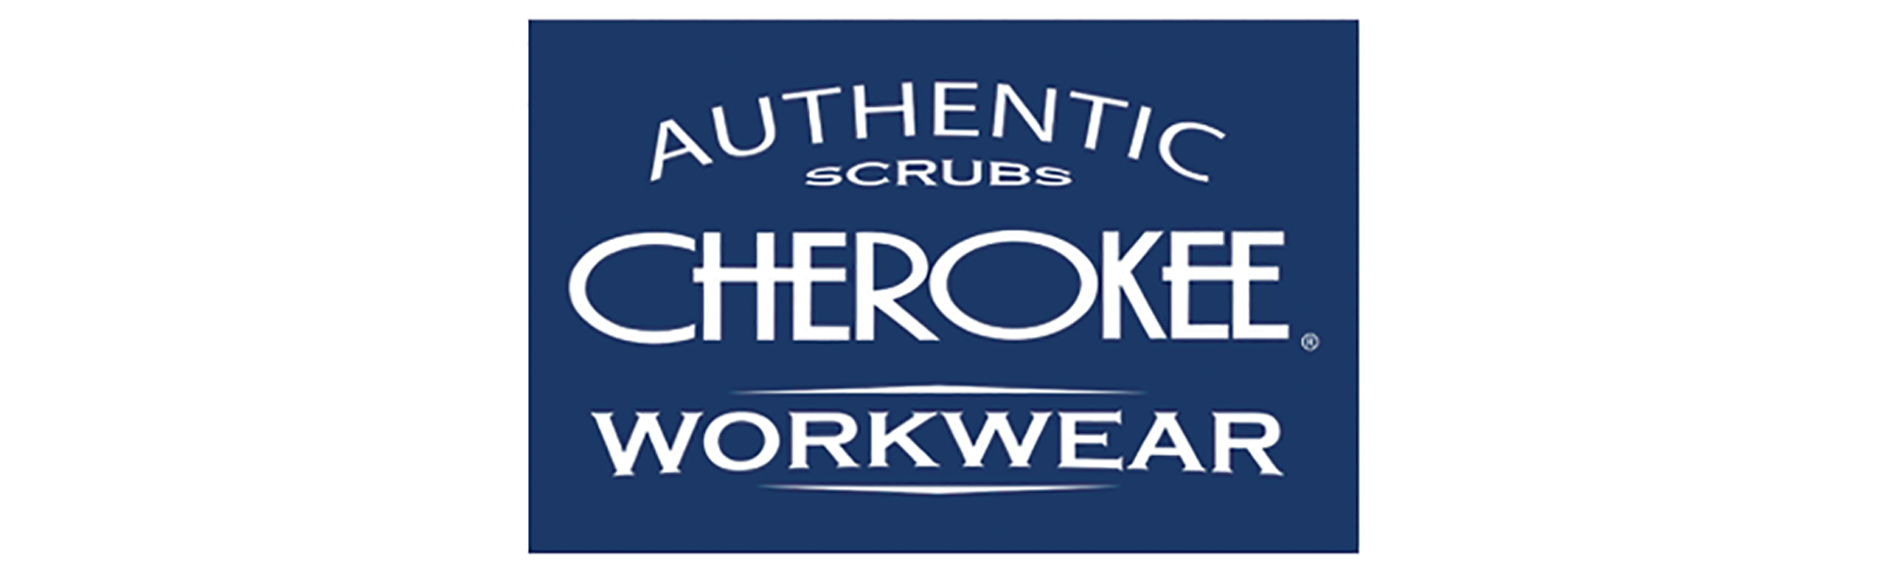 cherokee srubs